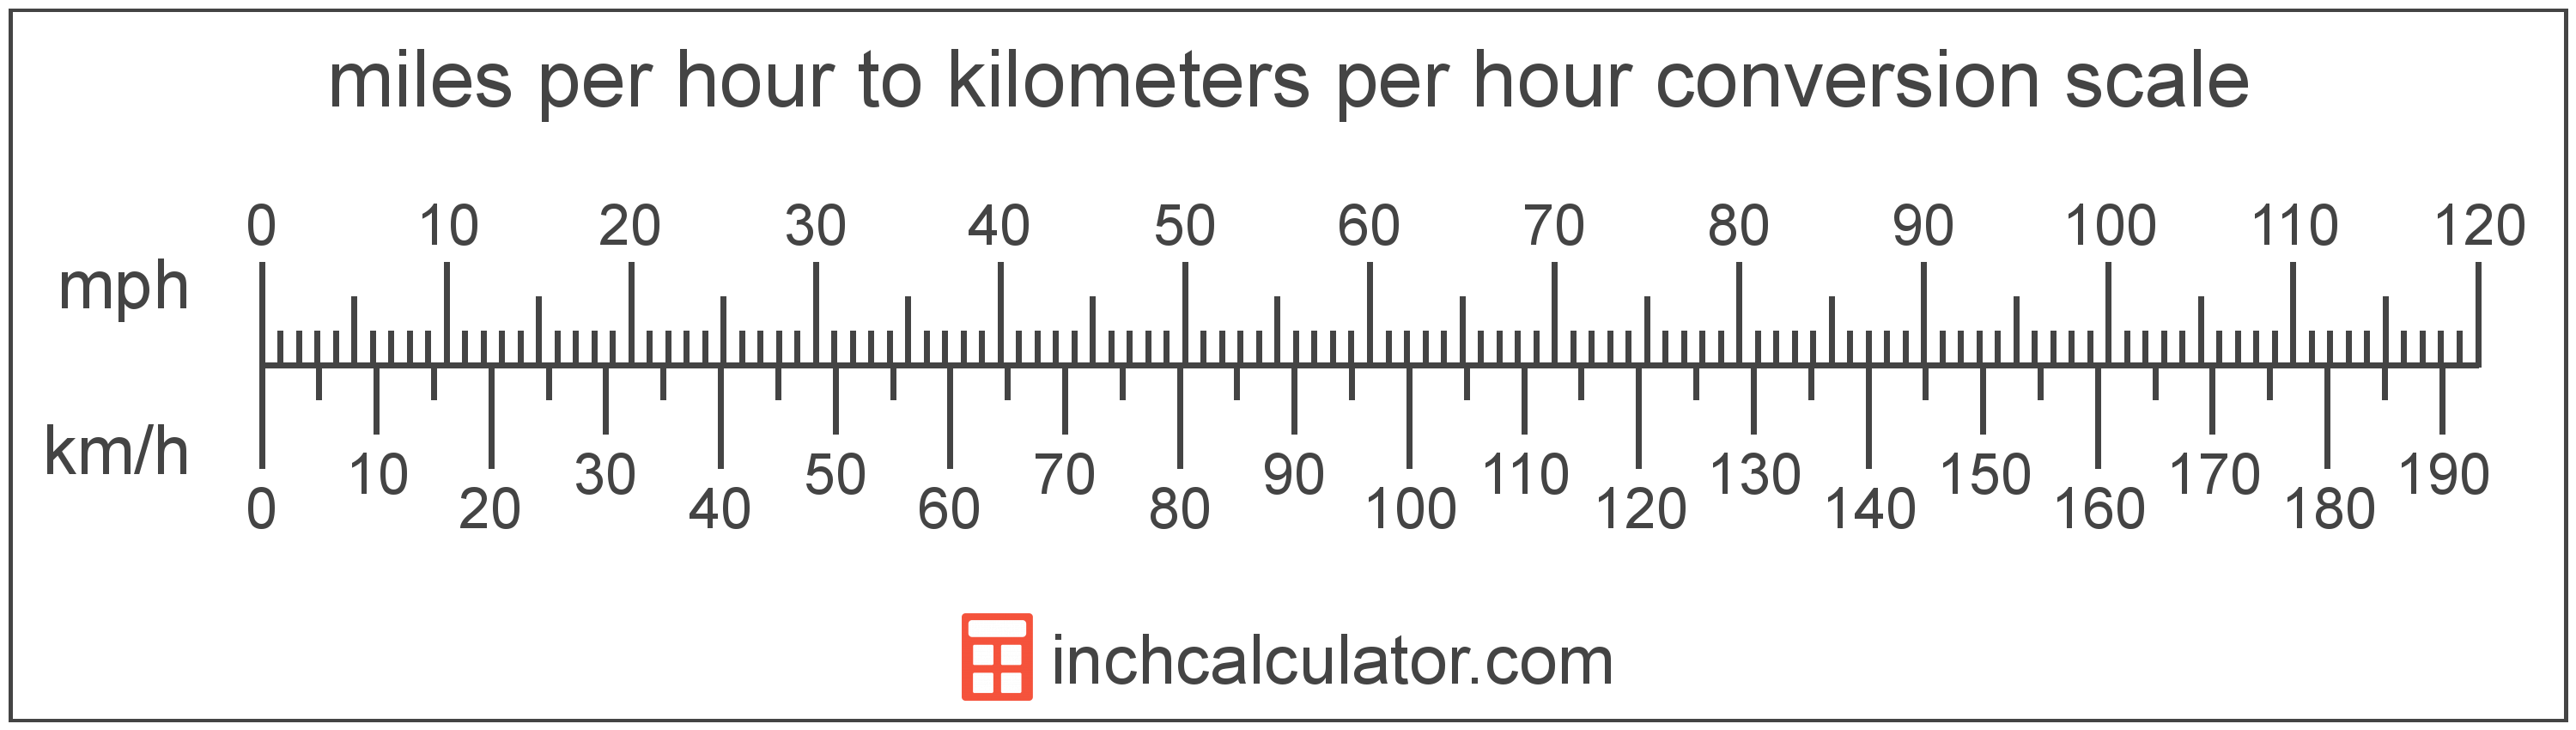 Kilometers Per Hour To Miles Per Hour Conversion Km H To Mph